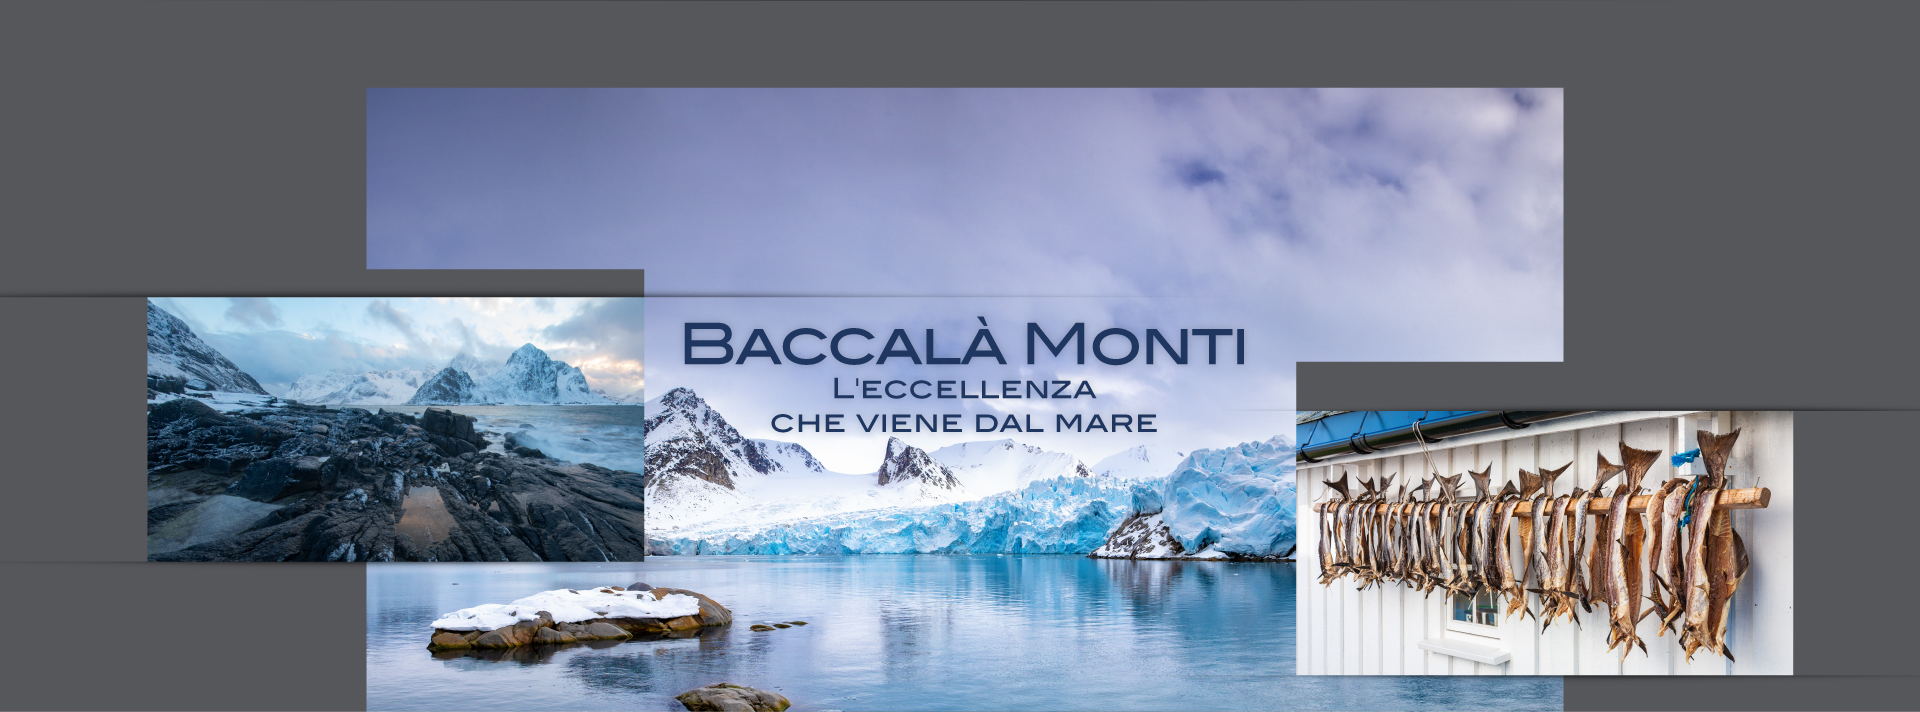 Baccalà Monti certificazioni-02